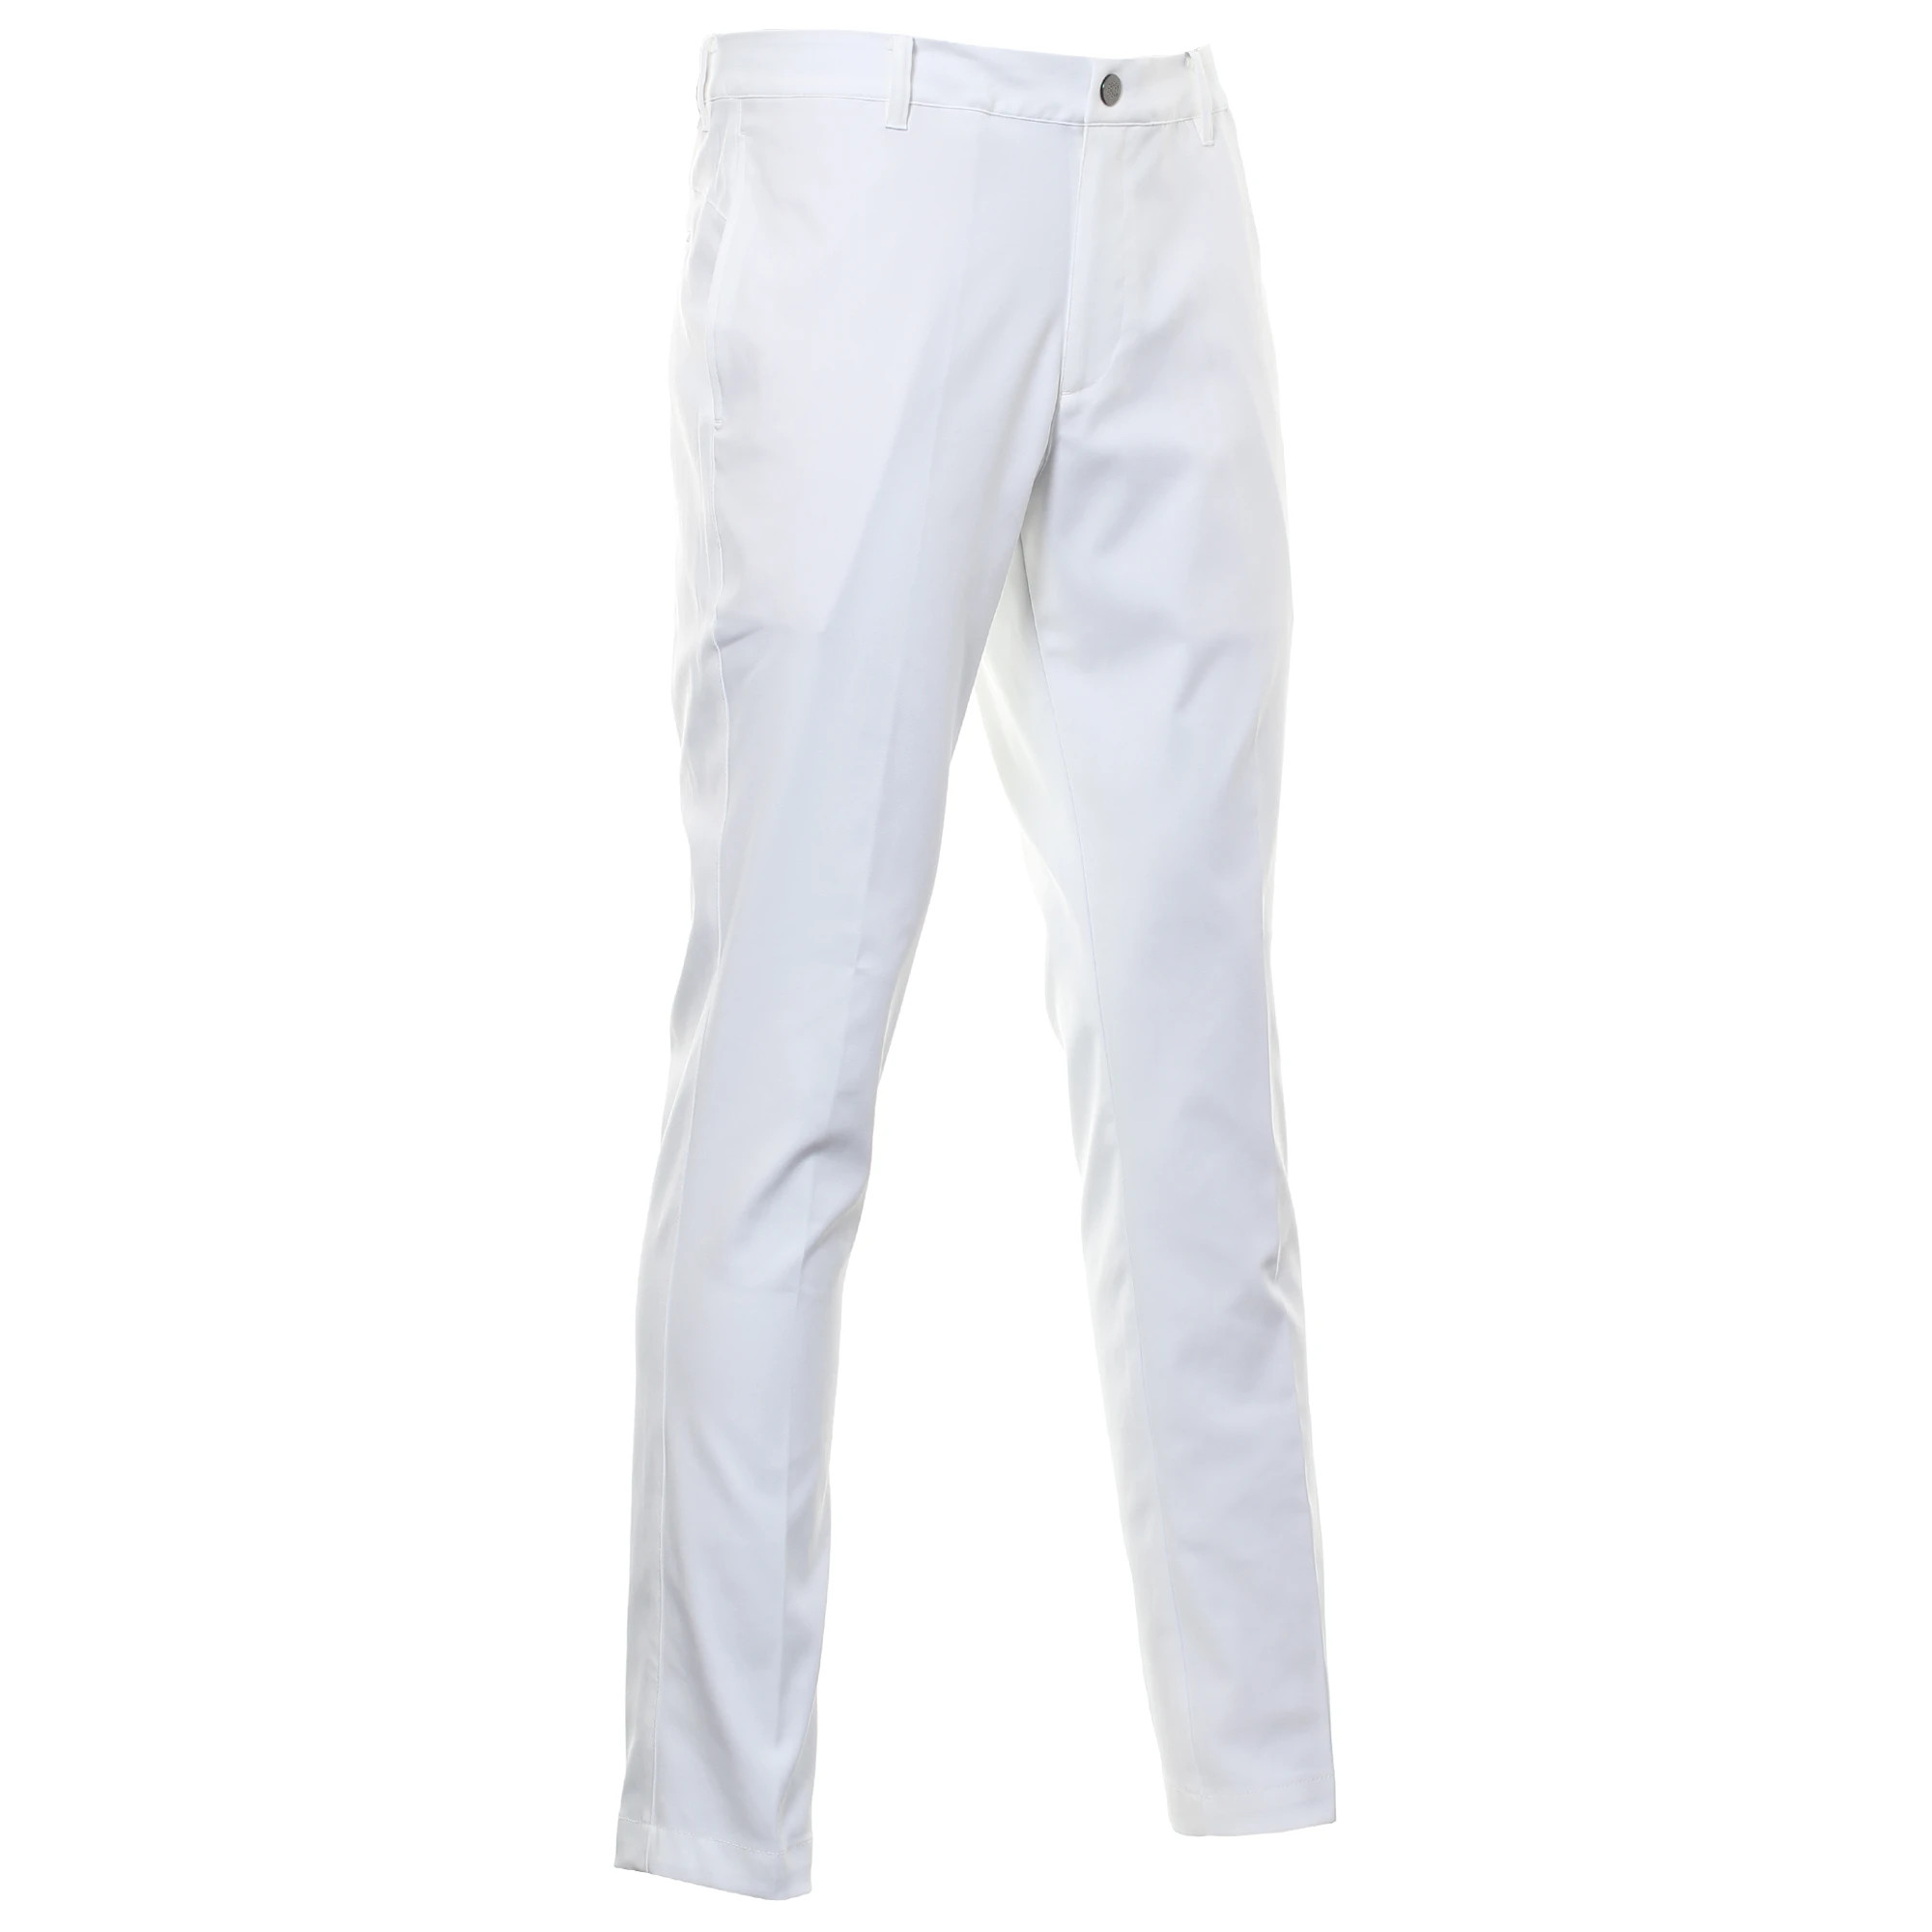 Quần Dài Golf Nam Puma Tailored Jackpot Pant - Bright white 59924402